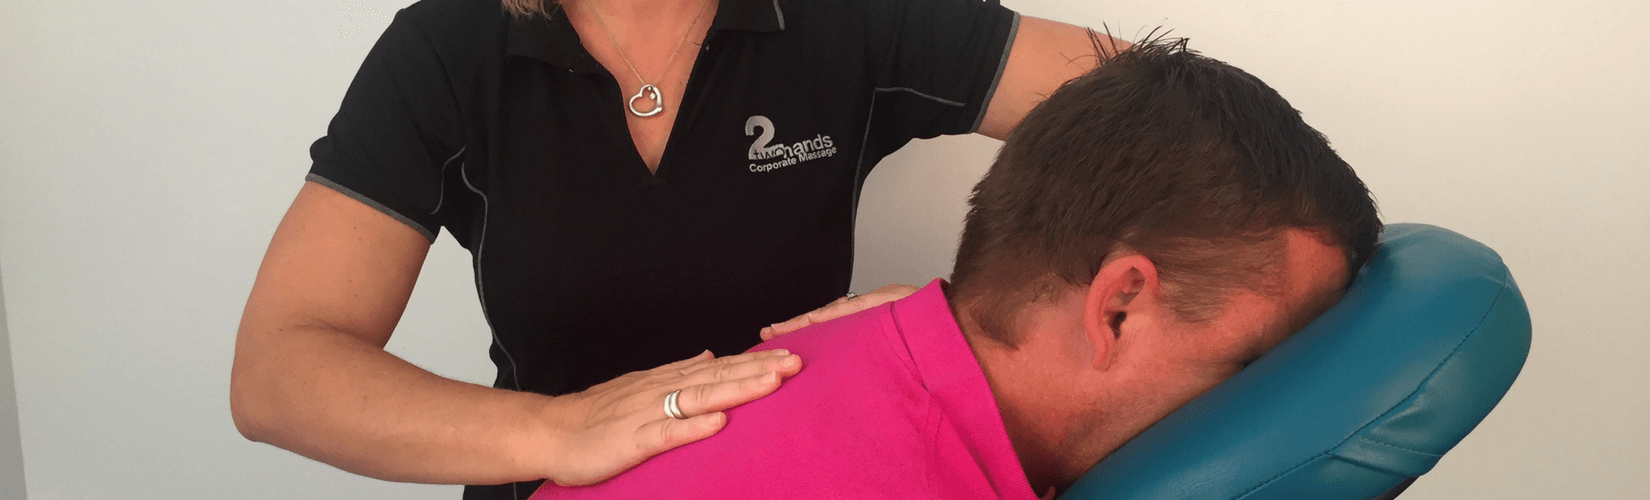 adam pink shirt no logo getting a seated massage